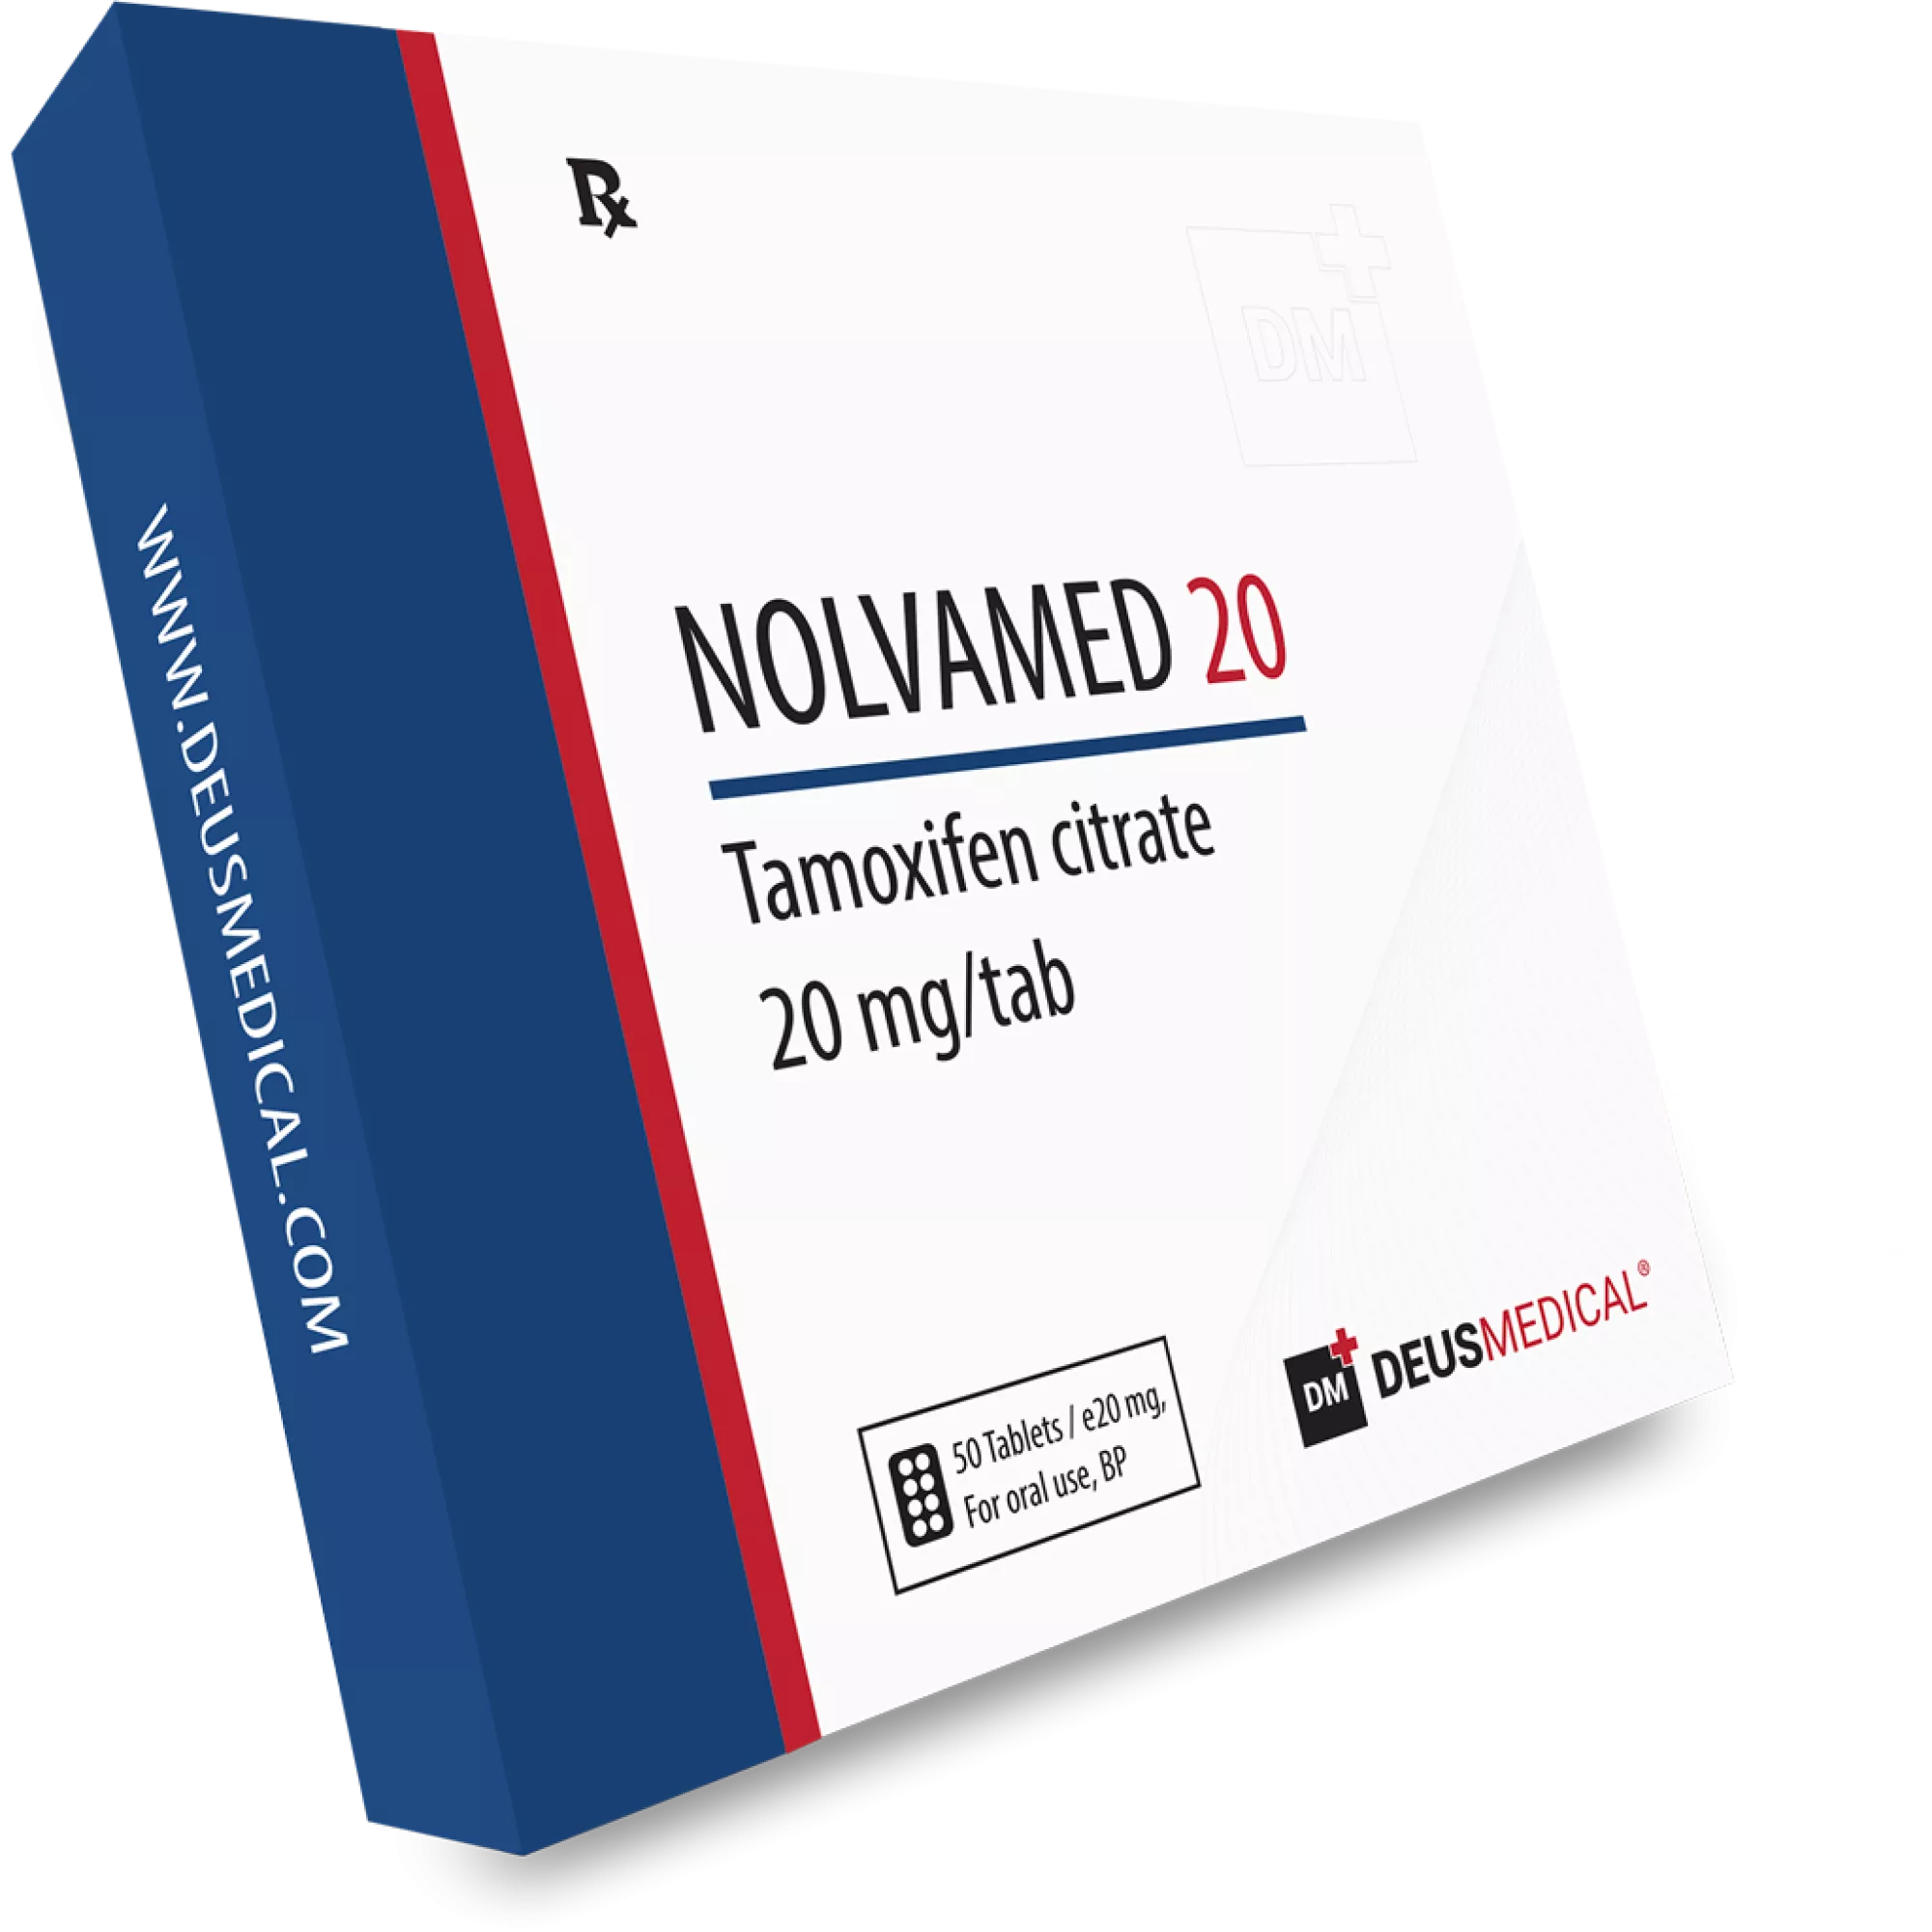 NOLVAMED 20 (Tamoxifen Citrate), Deus Medical, Buy Steroids Online - www.deuspower.shop